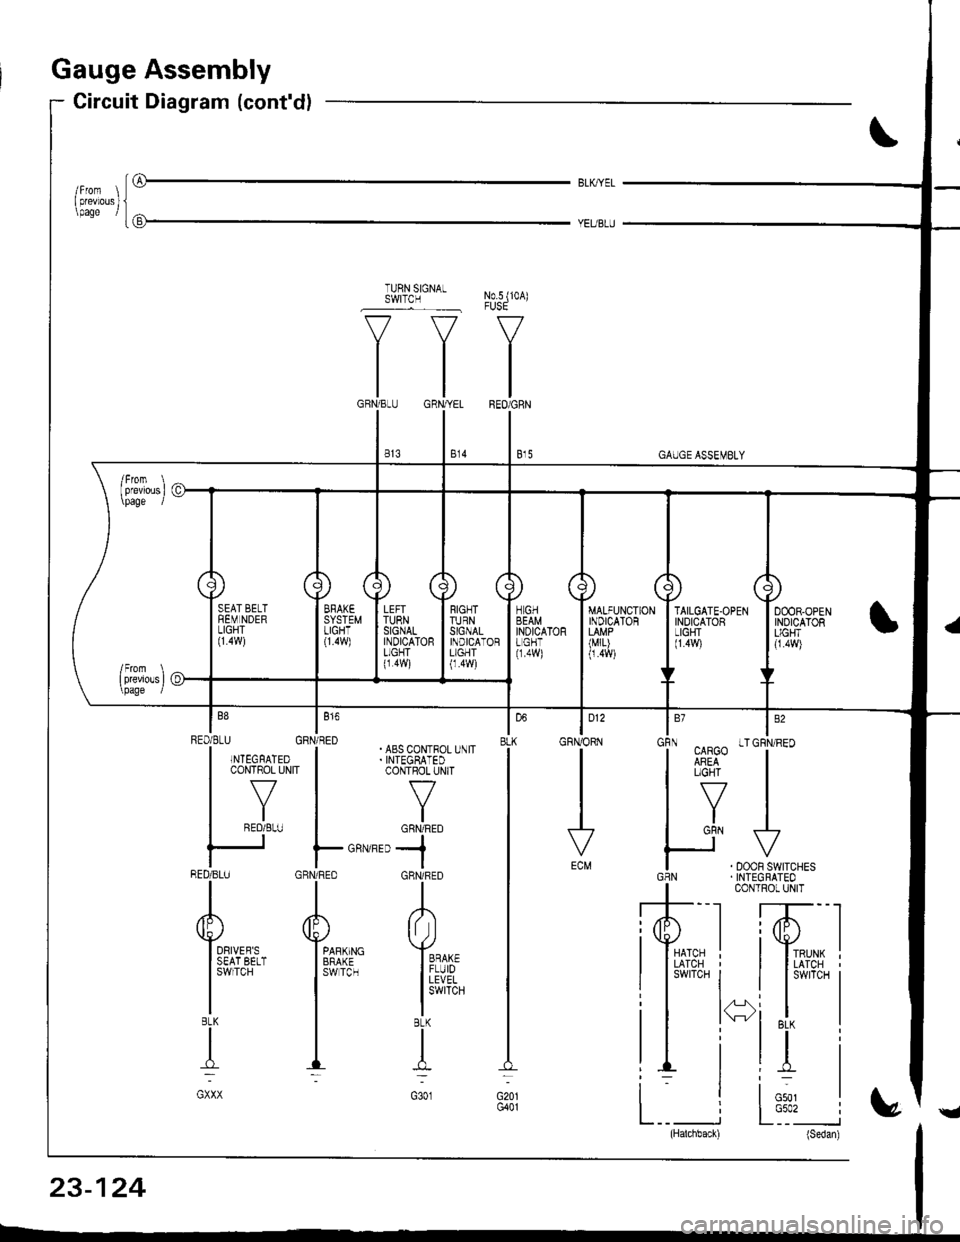 HONDA INTEGRA 1998 4.G Workshop Manual auge Assembly
Circuit Diagram (contdl
iG
BLK,IYEL
No.5 (10A)
V
IREO/GRN
I e,s
TURN SIGNALSWITCN
v--=v
tltl
tlGBN/BLIJ GRN,YEL
lltl
I es I s,o
"i.uv"T""
H^,J.**.GBN . INTEGRATEO
I coNrRor uNrT
,T--